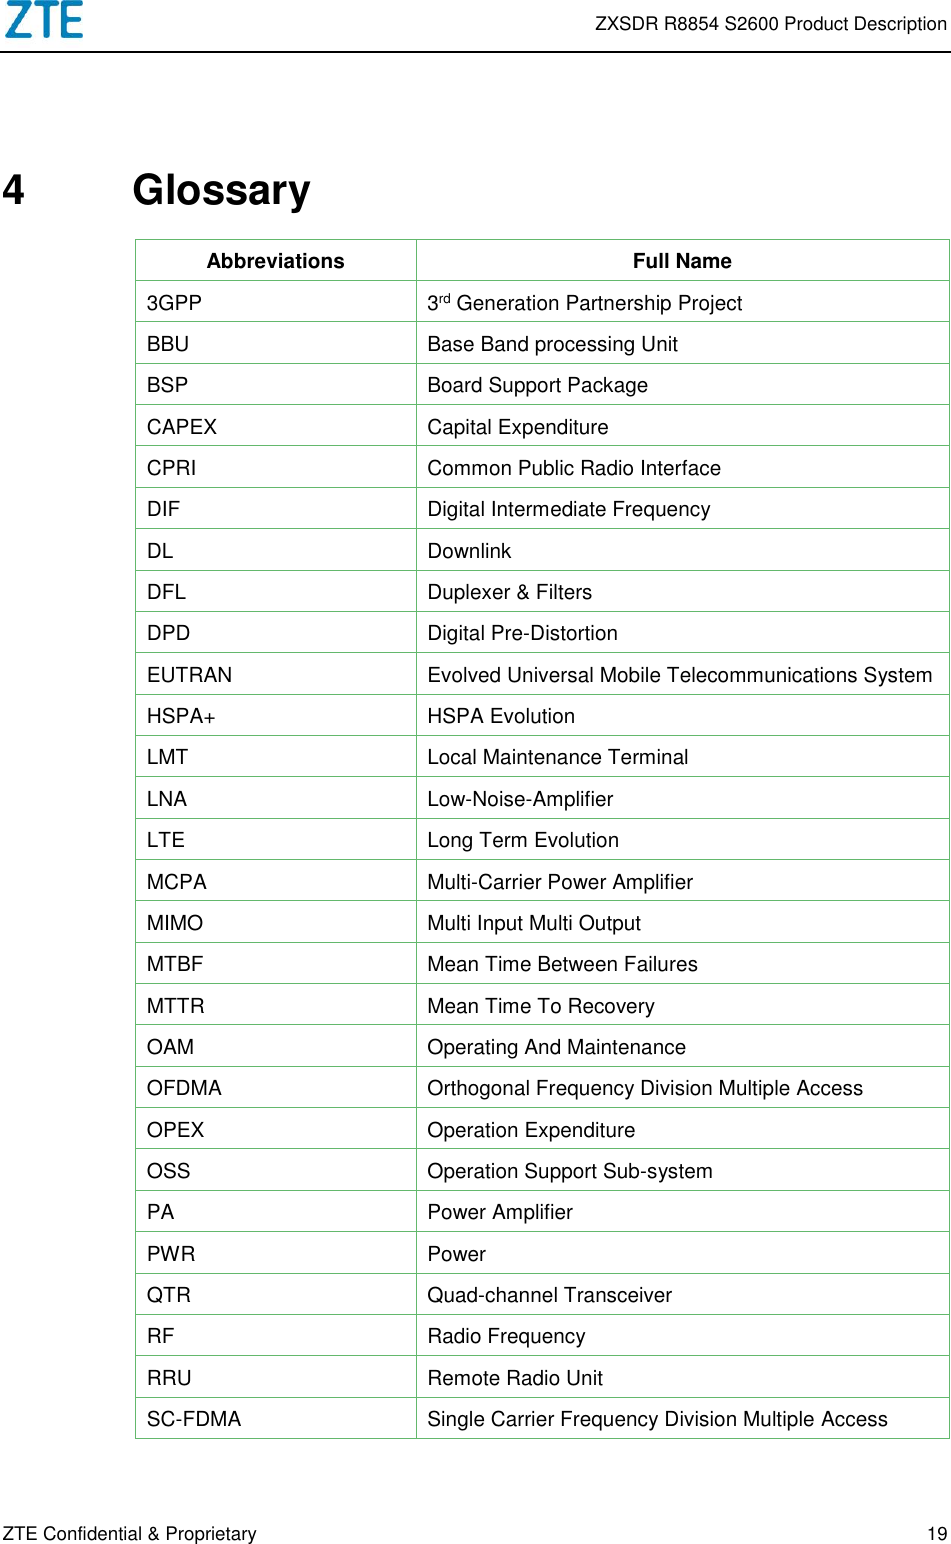 Page 21 of ZTE R8854S2600 Macro Radio Remote Unit User Manual ZXSDR R8854 S2600 Product Description